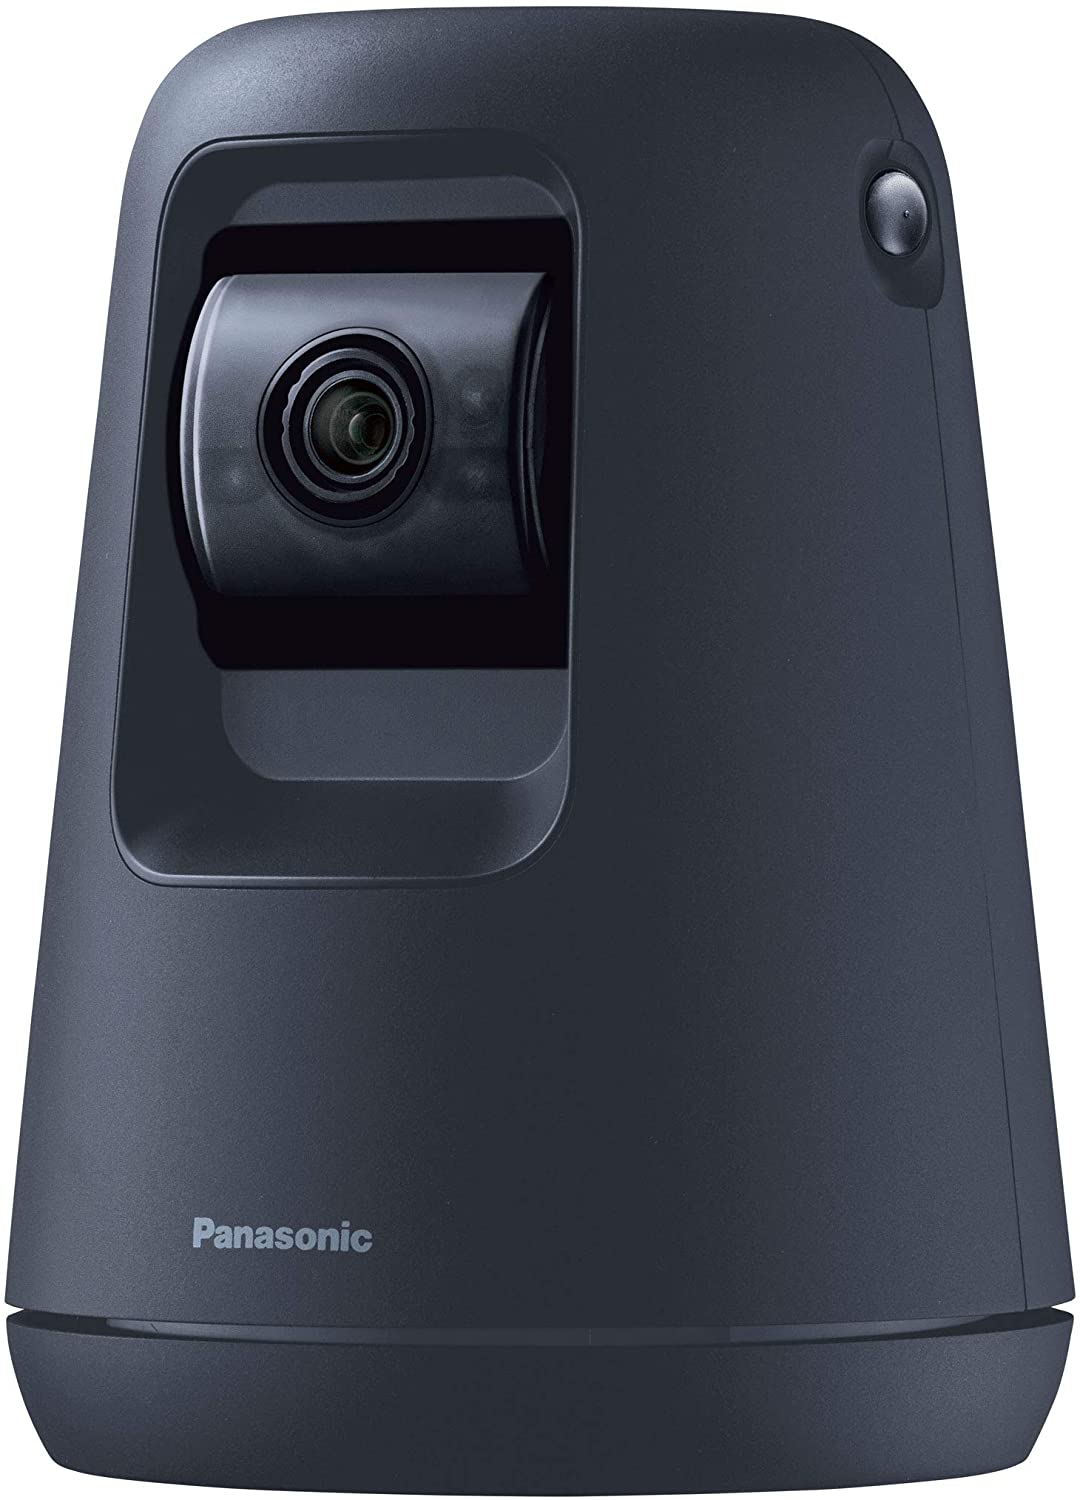 NEW Panasonic 時間指定不可 HDペットカメラ 税込 KX-HDN215-K